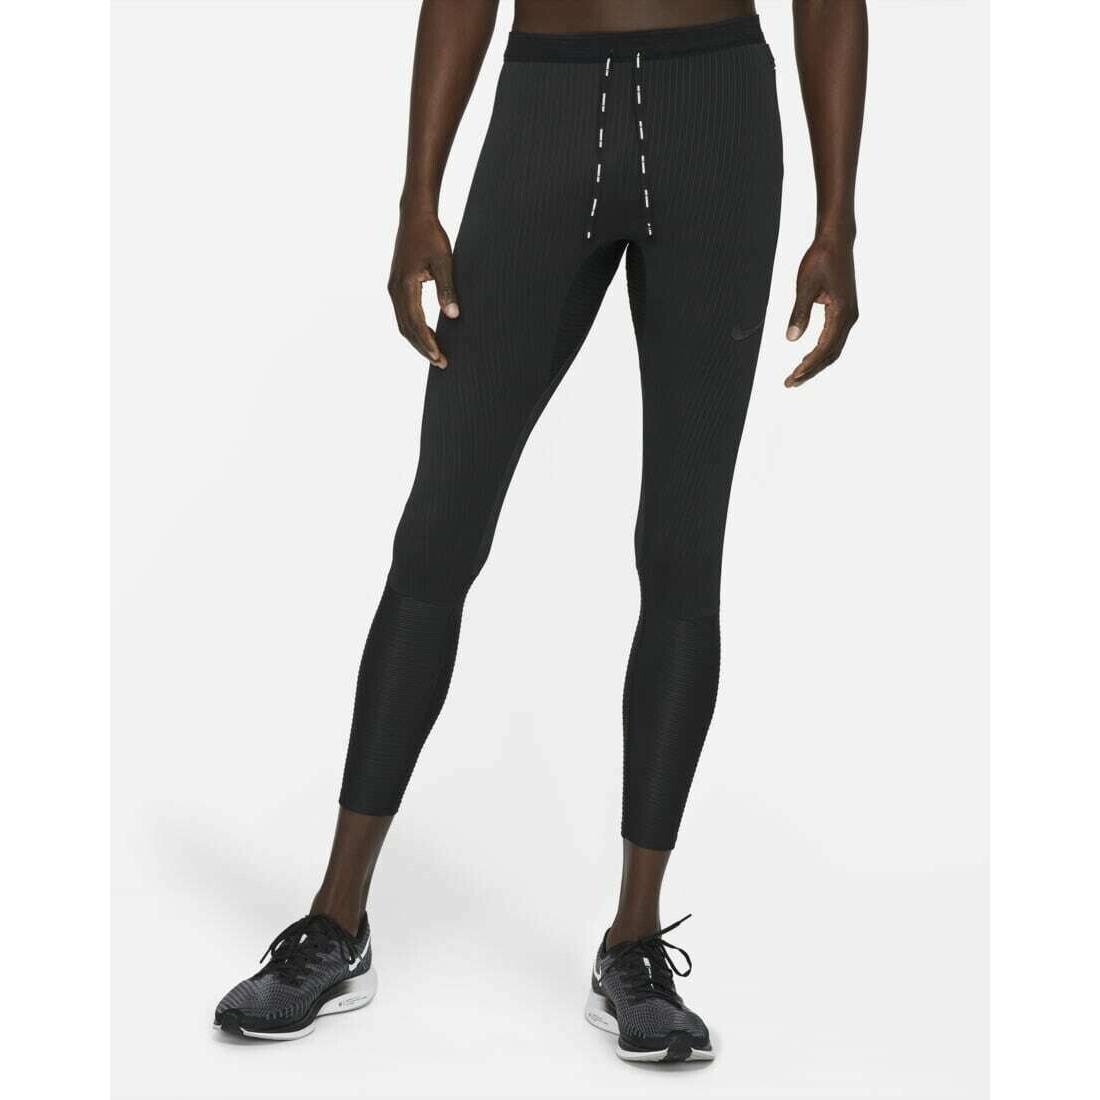 Nike Dri-fit Swift Running Tights Full Length Run Pants Black Large